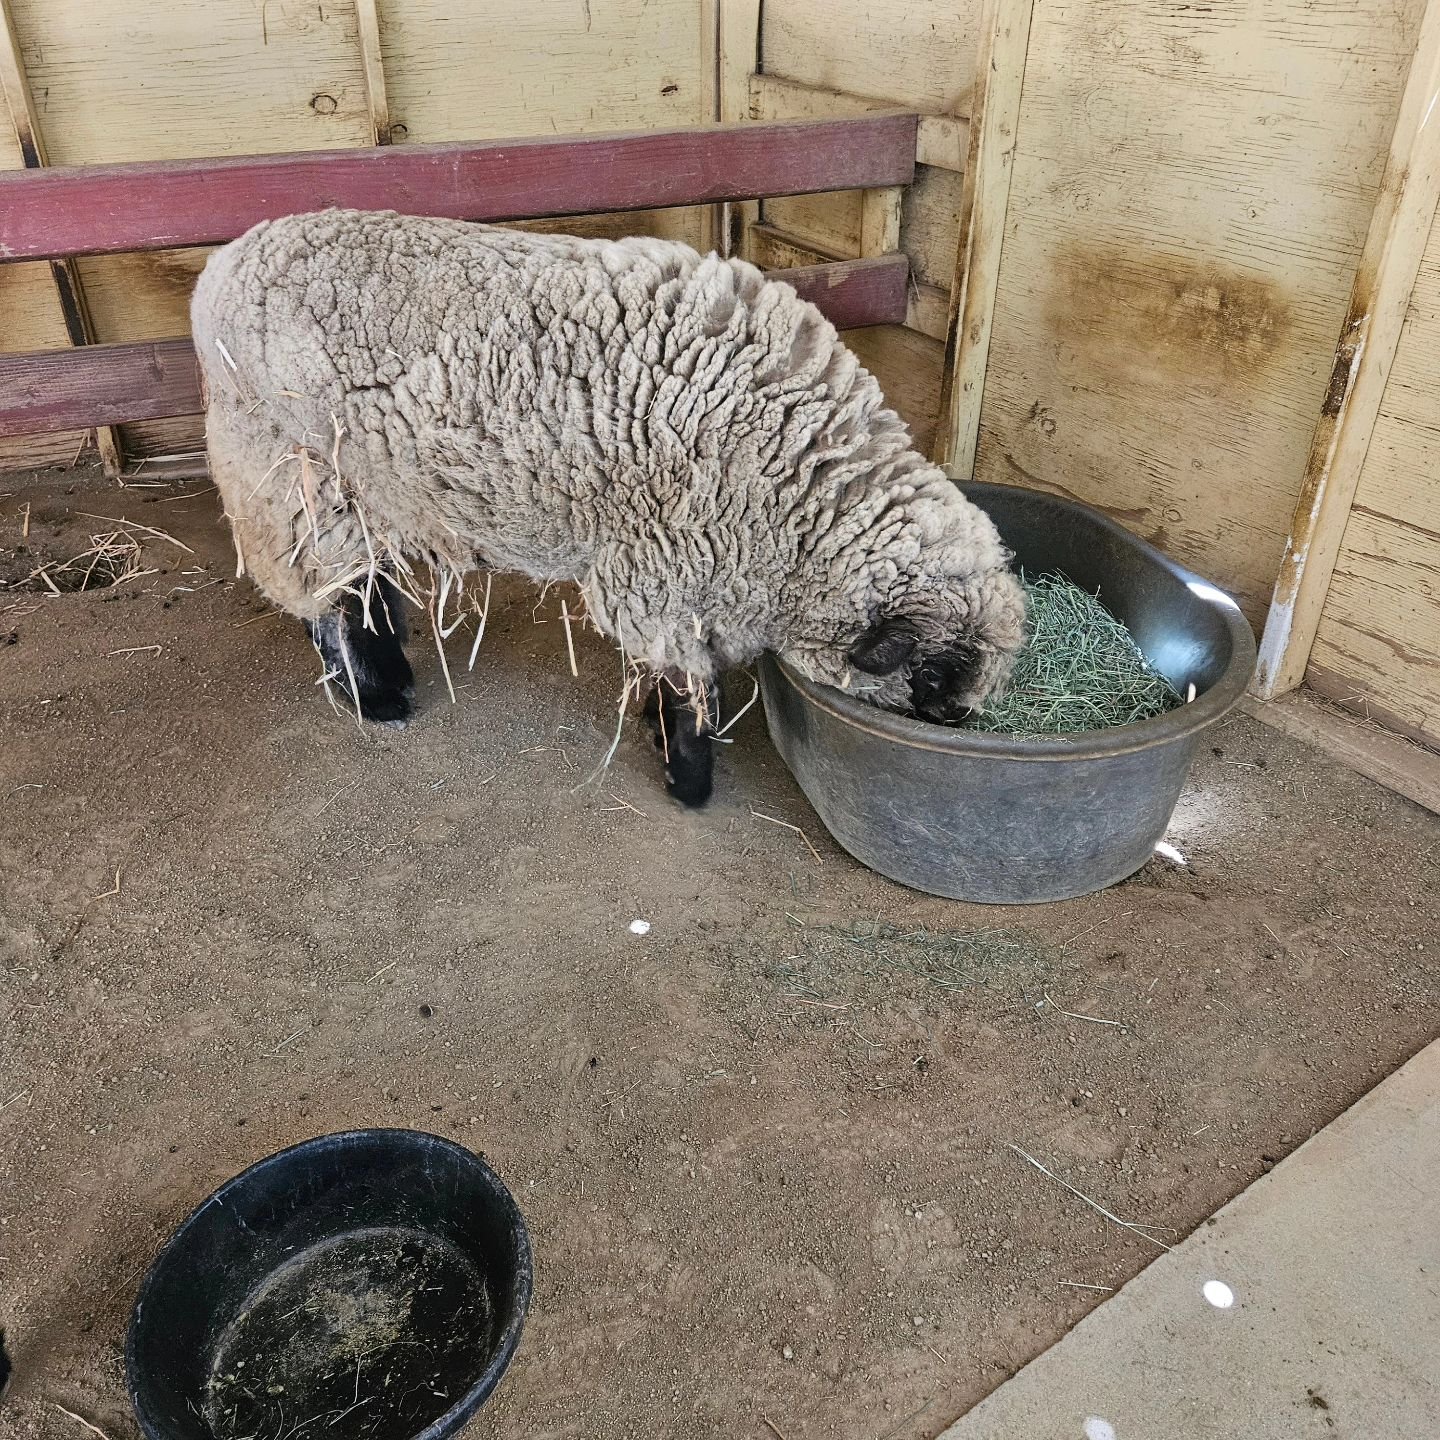 Sheep got sheared yesterday! Getting ready for that hot san fernando valley summer. @whpschool